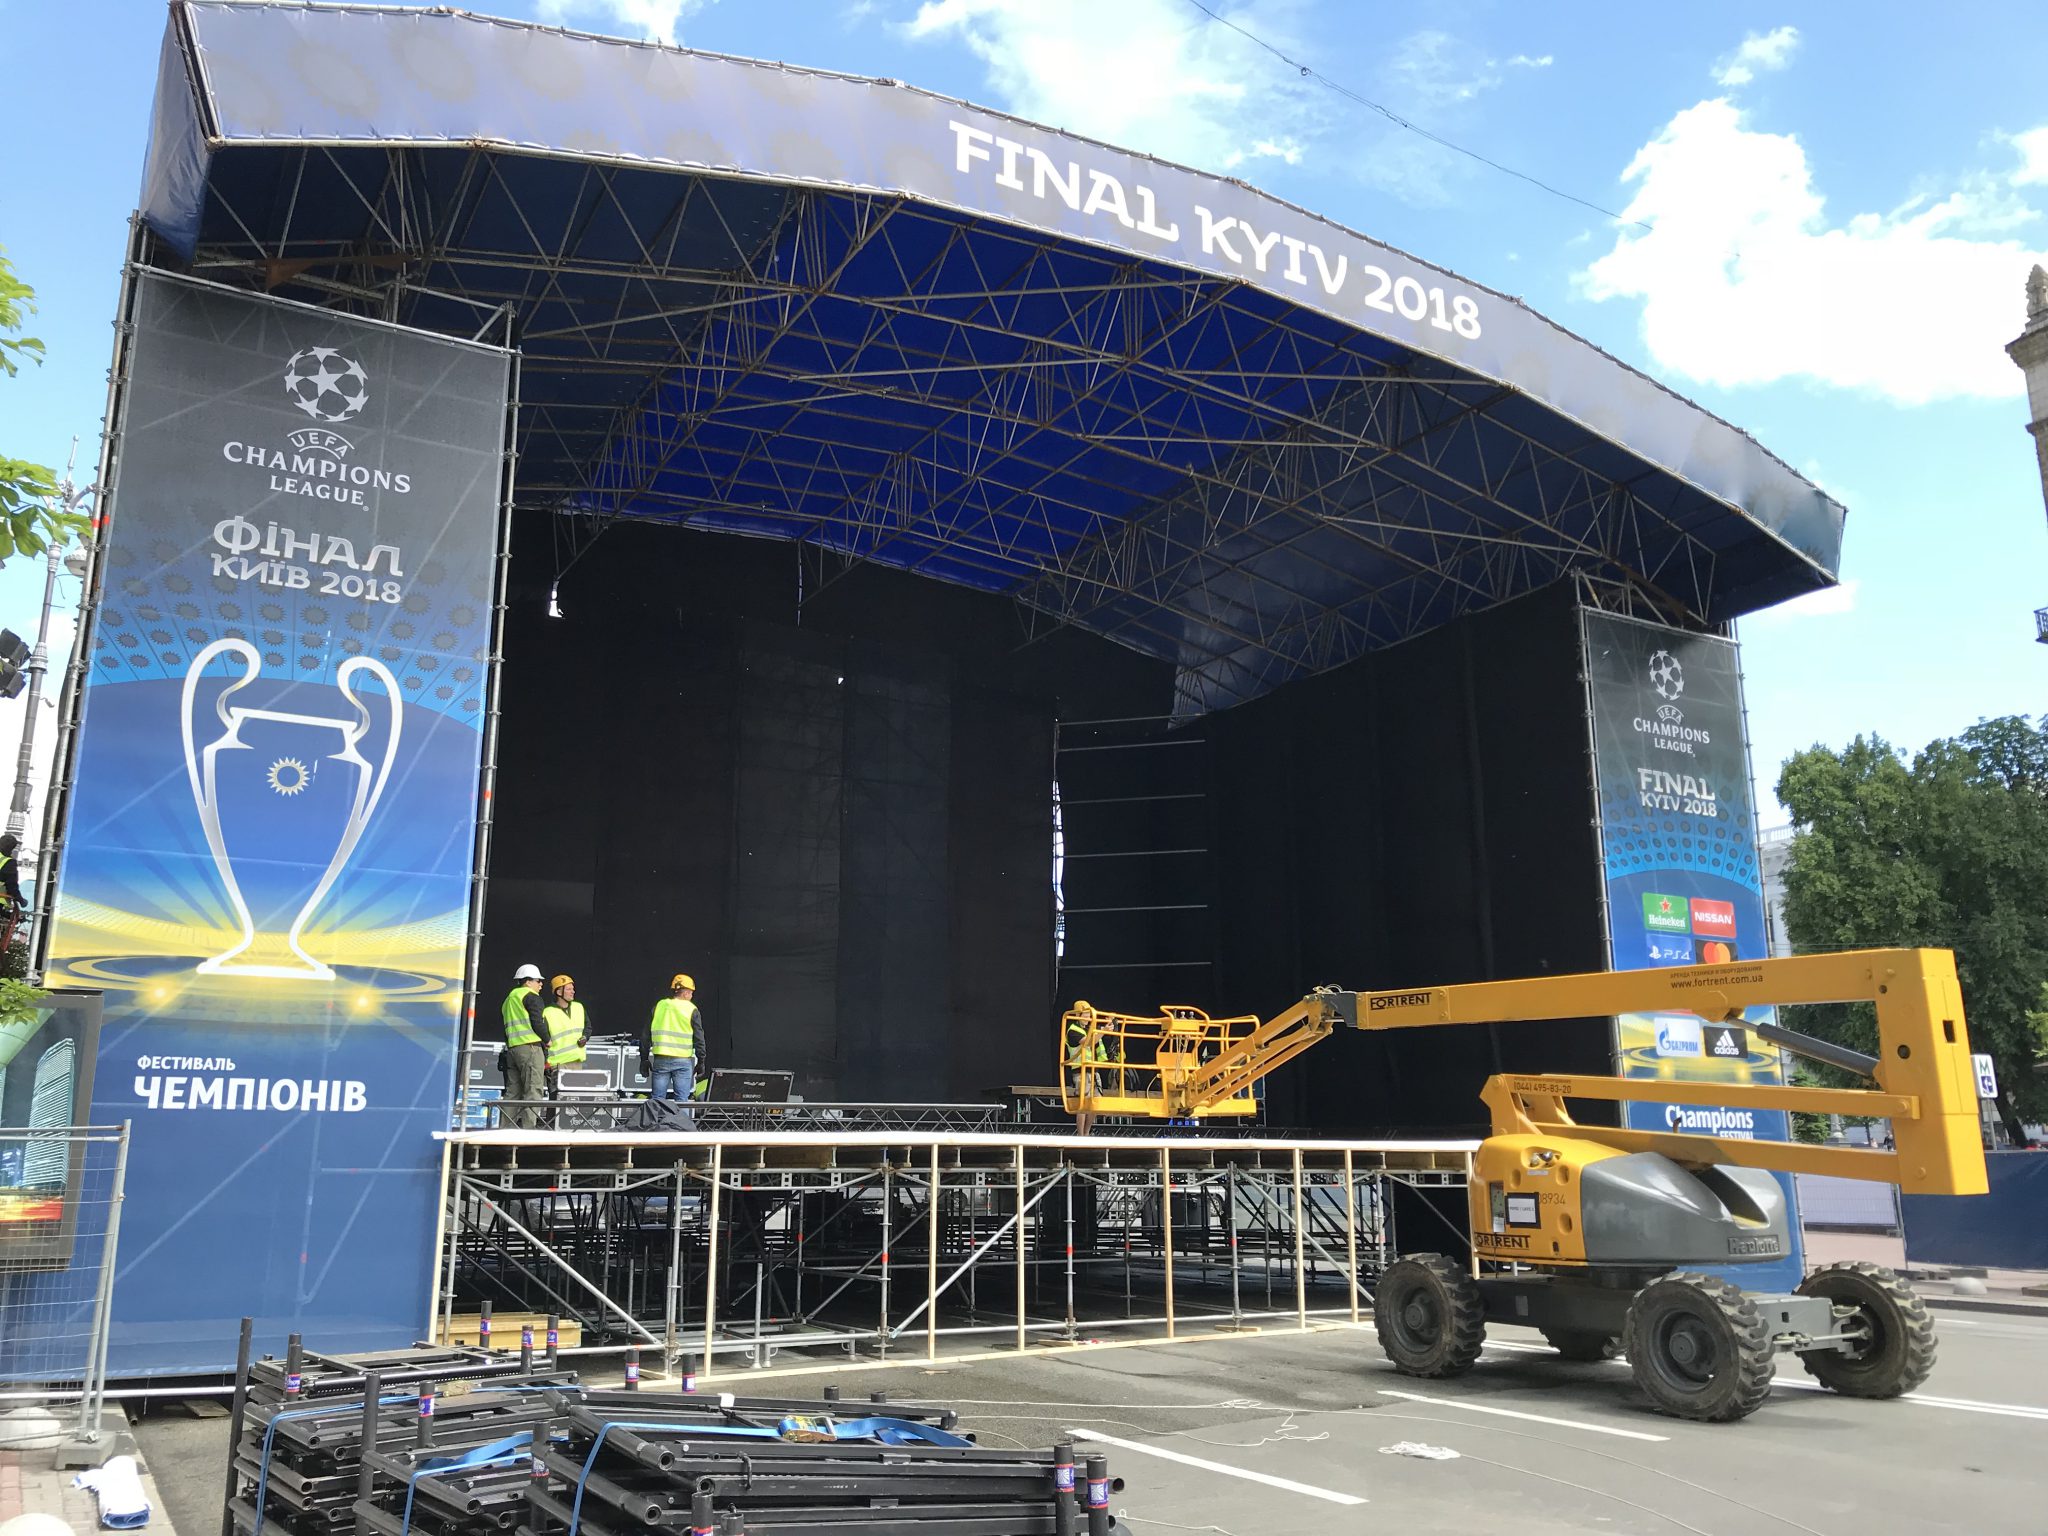 UEFA Champions League Festival